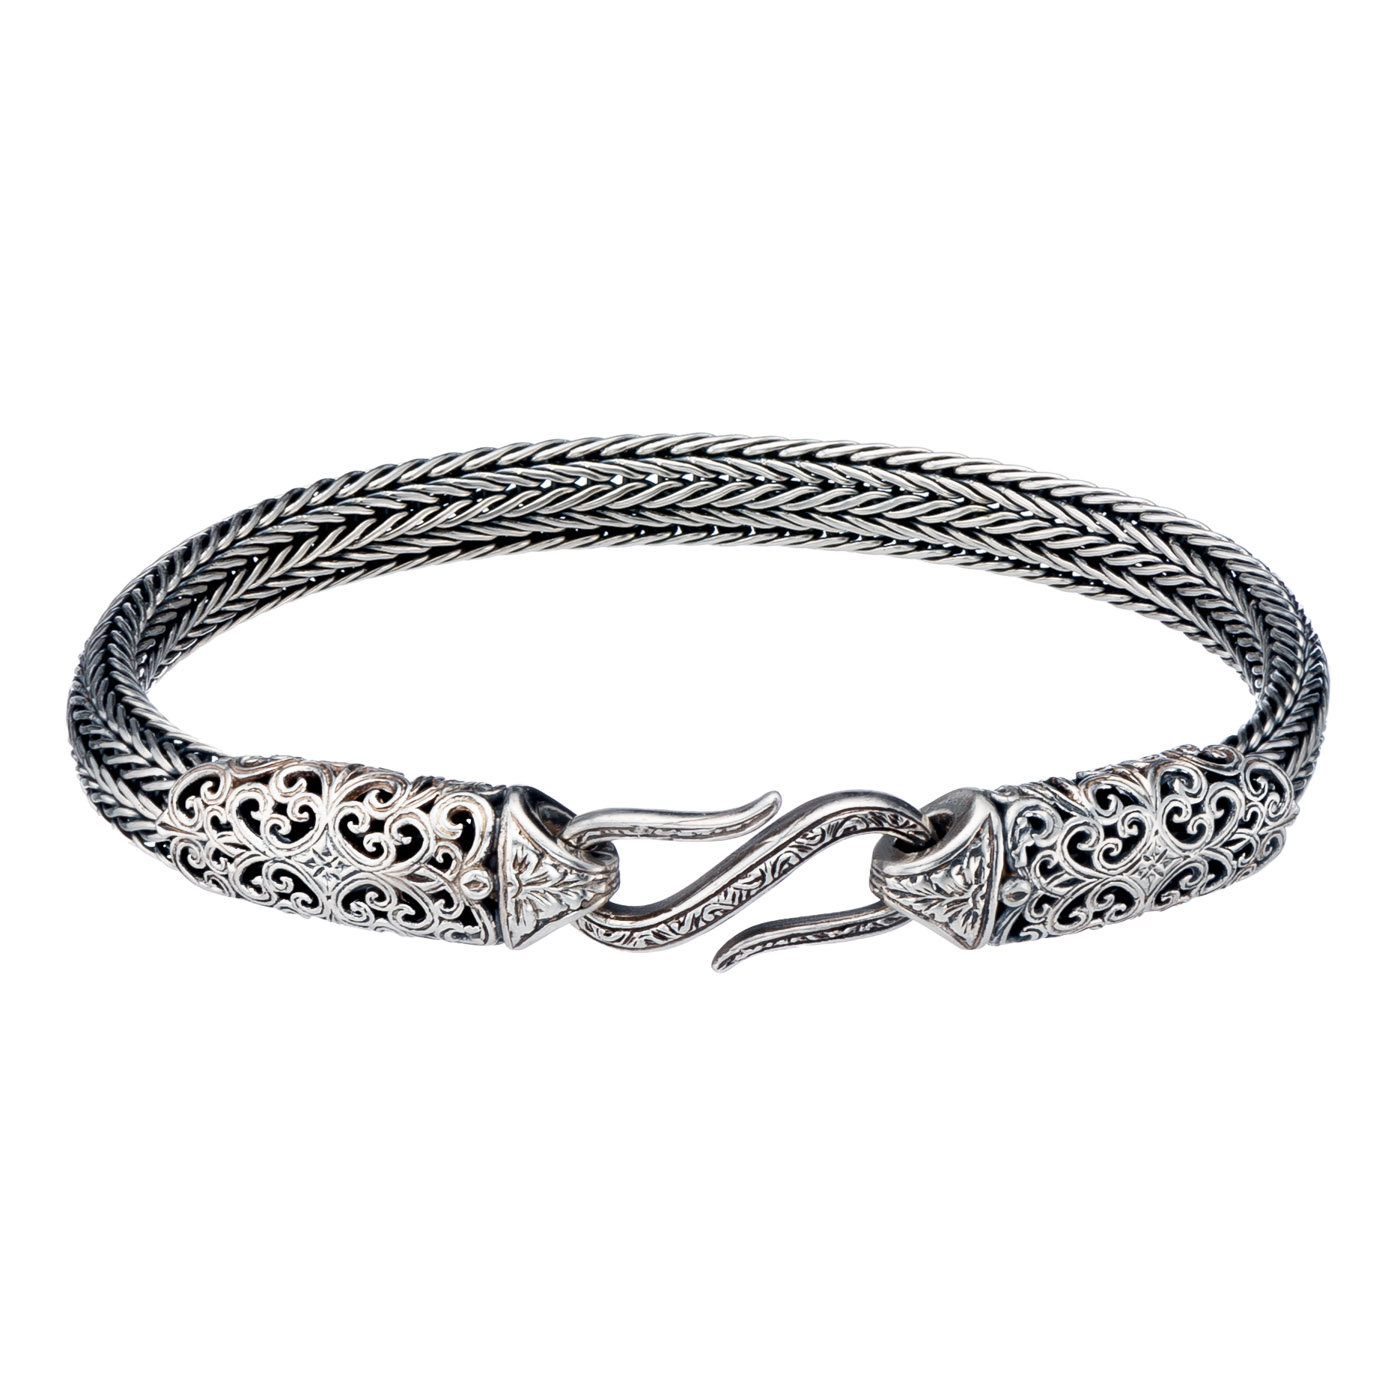 Aretousa bracelet in Sterling Silver